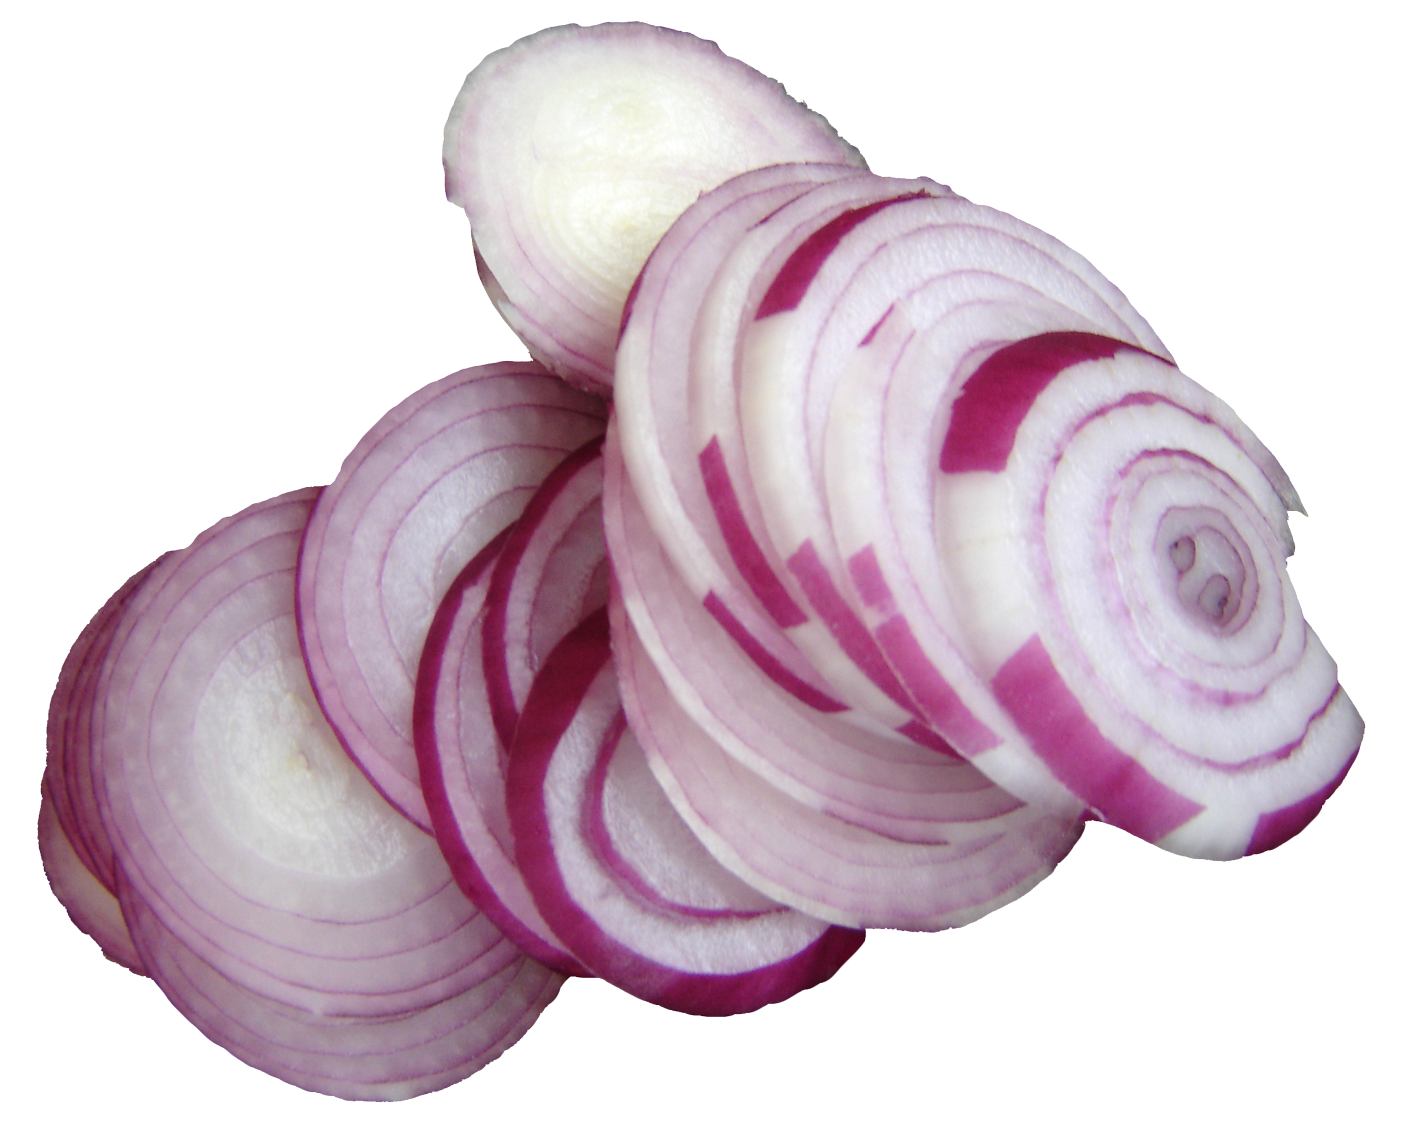 Onion Slice PNG Transparent Image